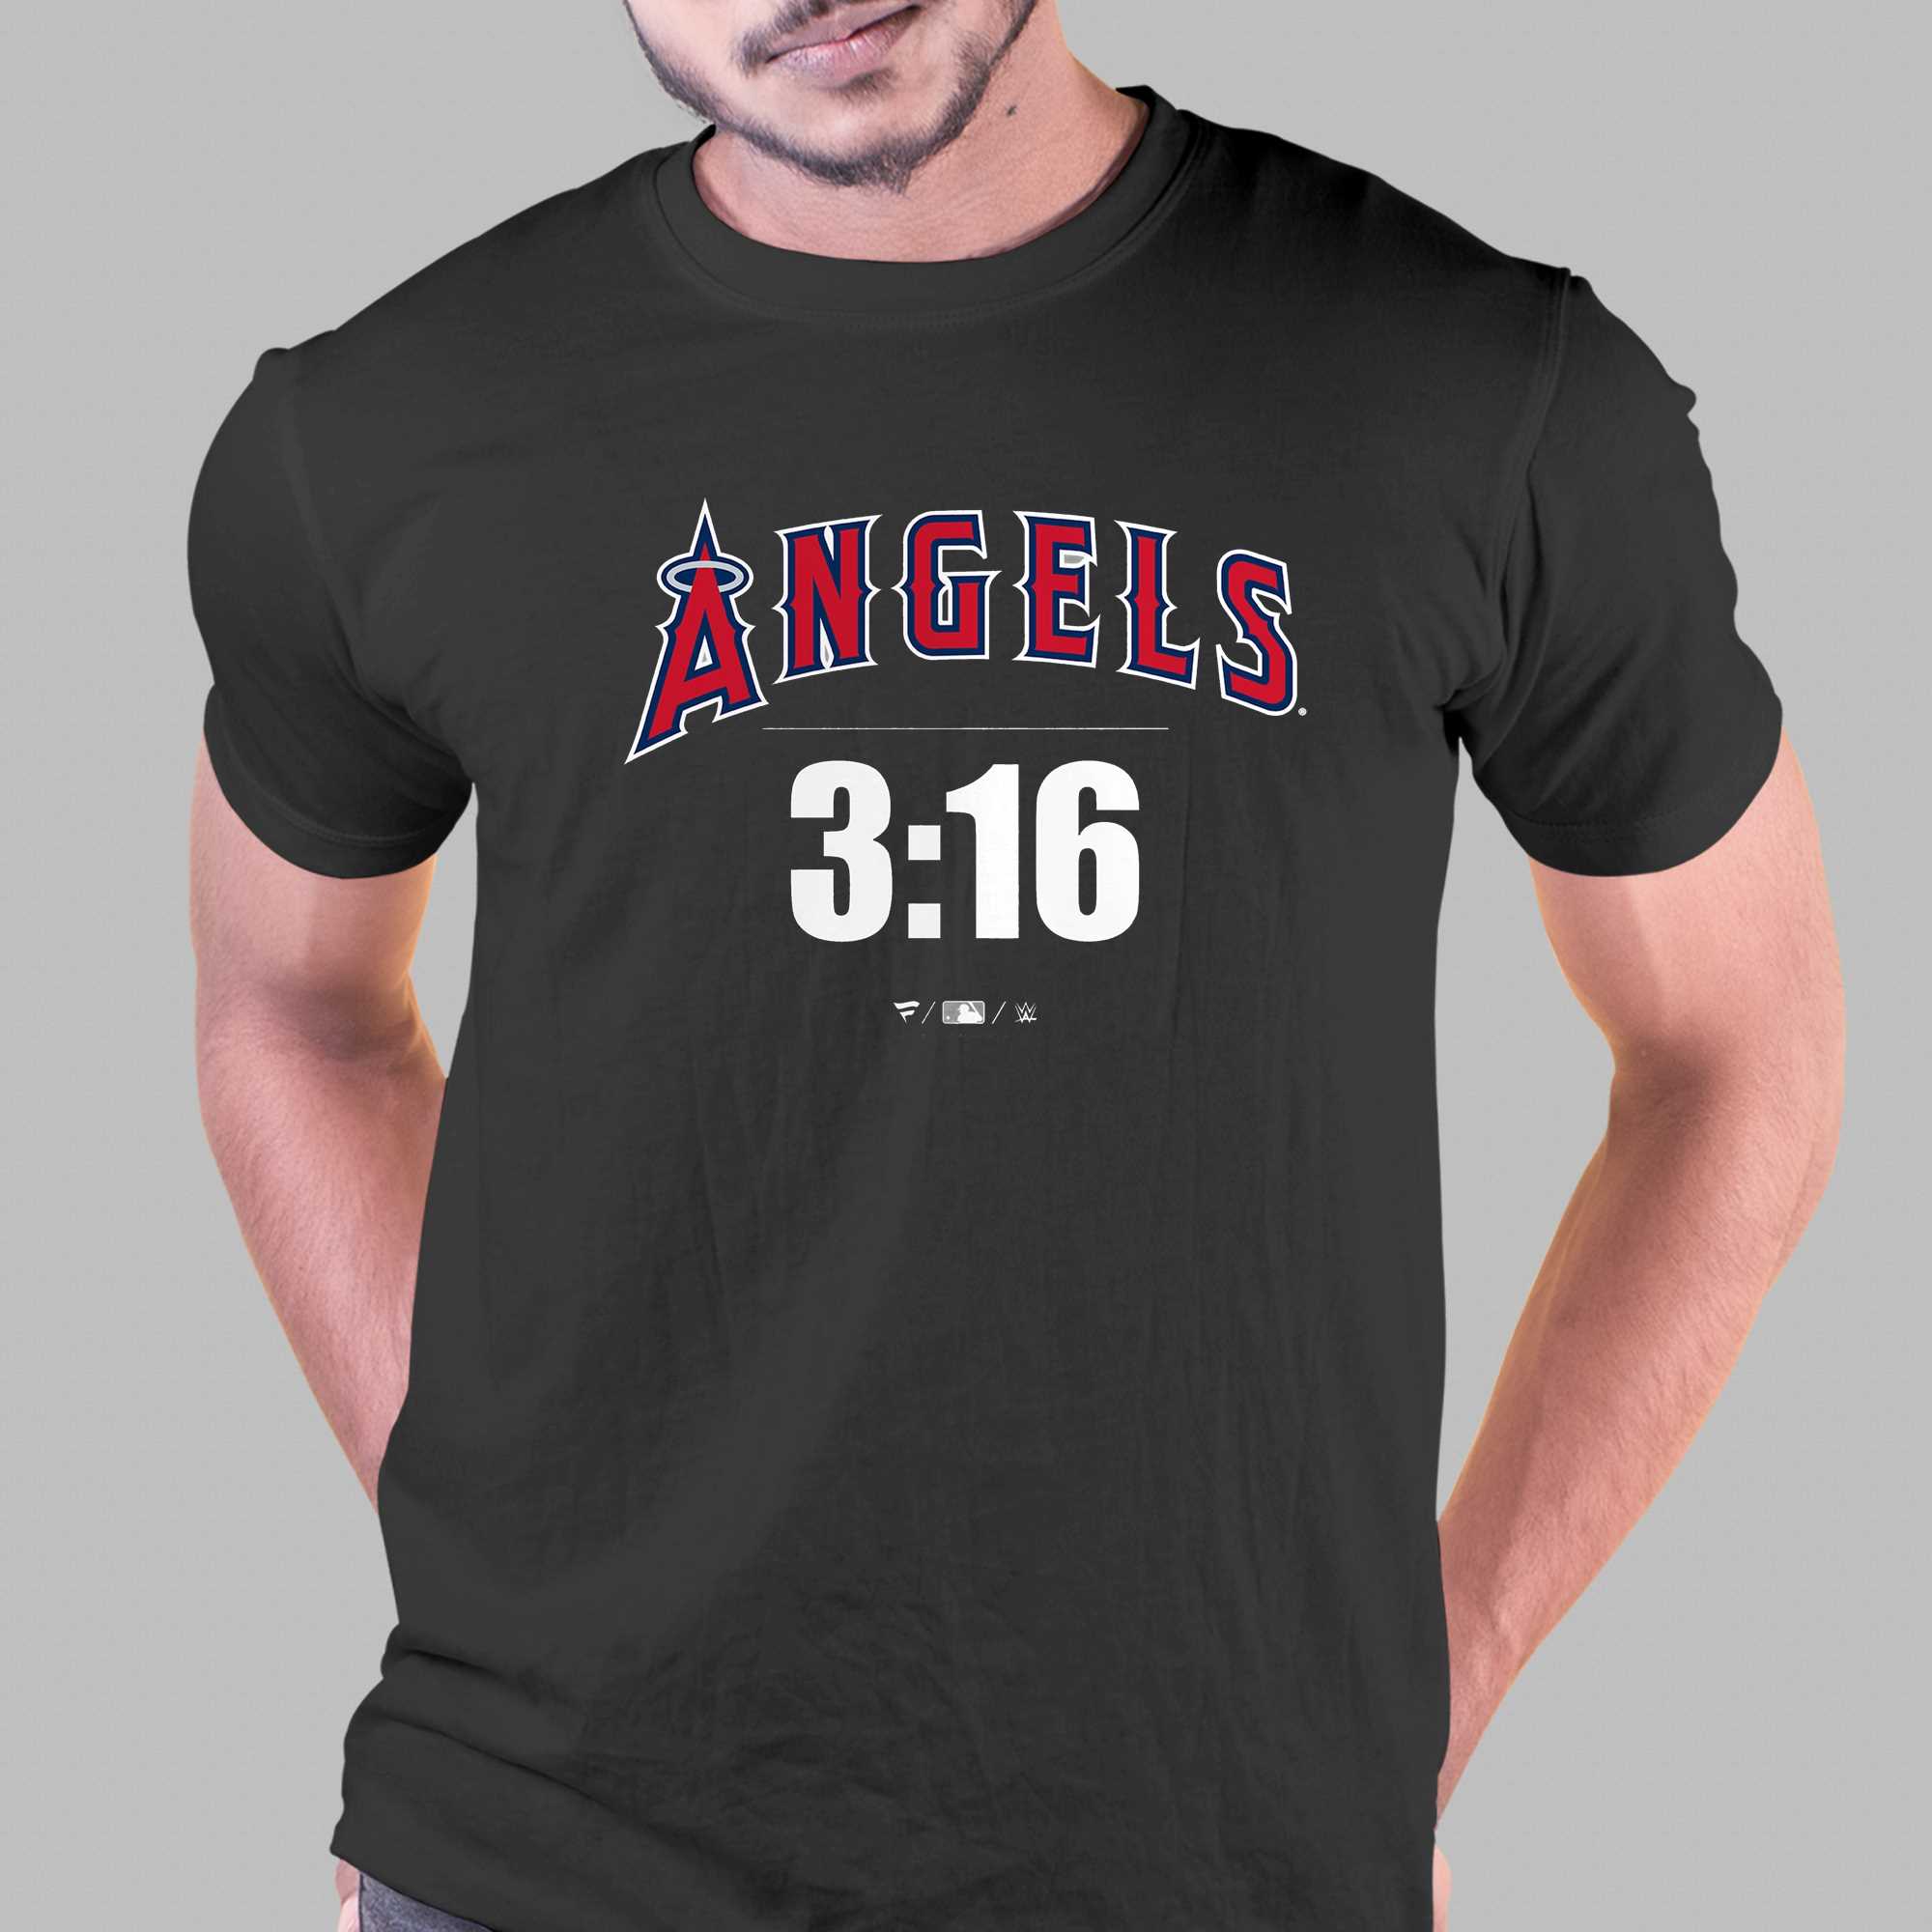 Los Angeles Angels Apparel & Gear.